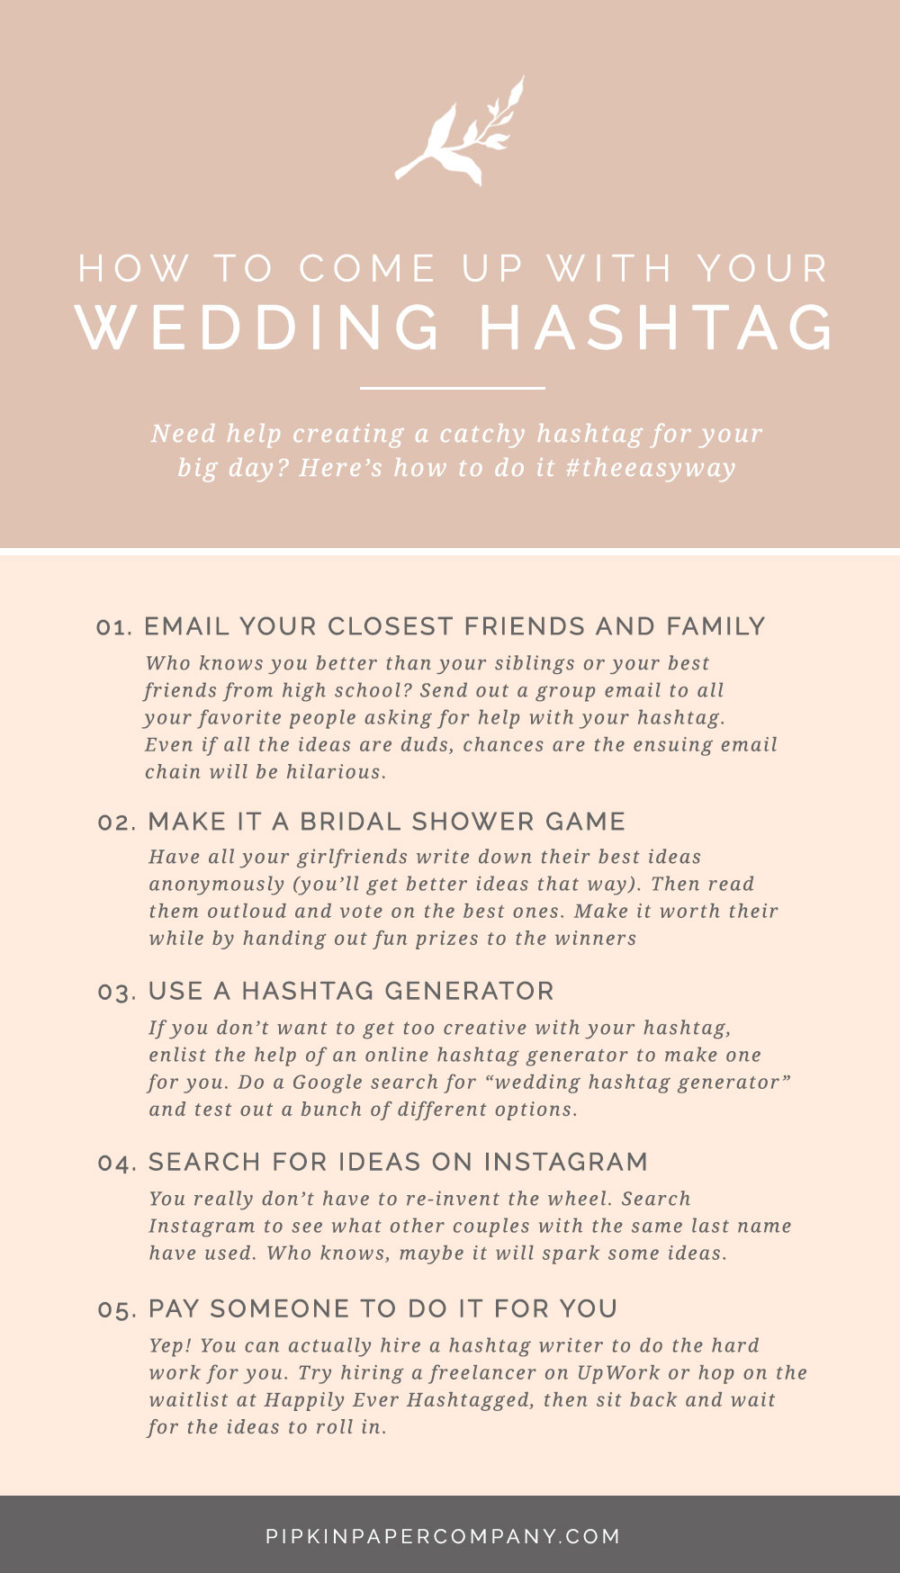 How to Create a Wedding Hashtag When You Have Zero Ideas